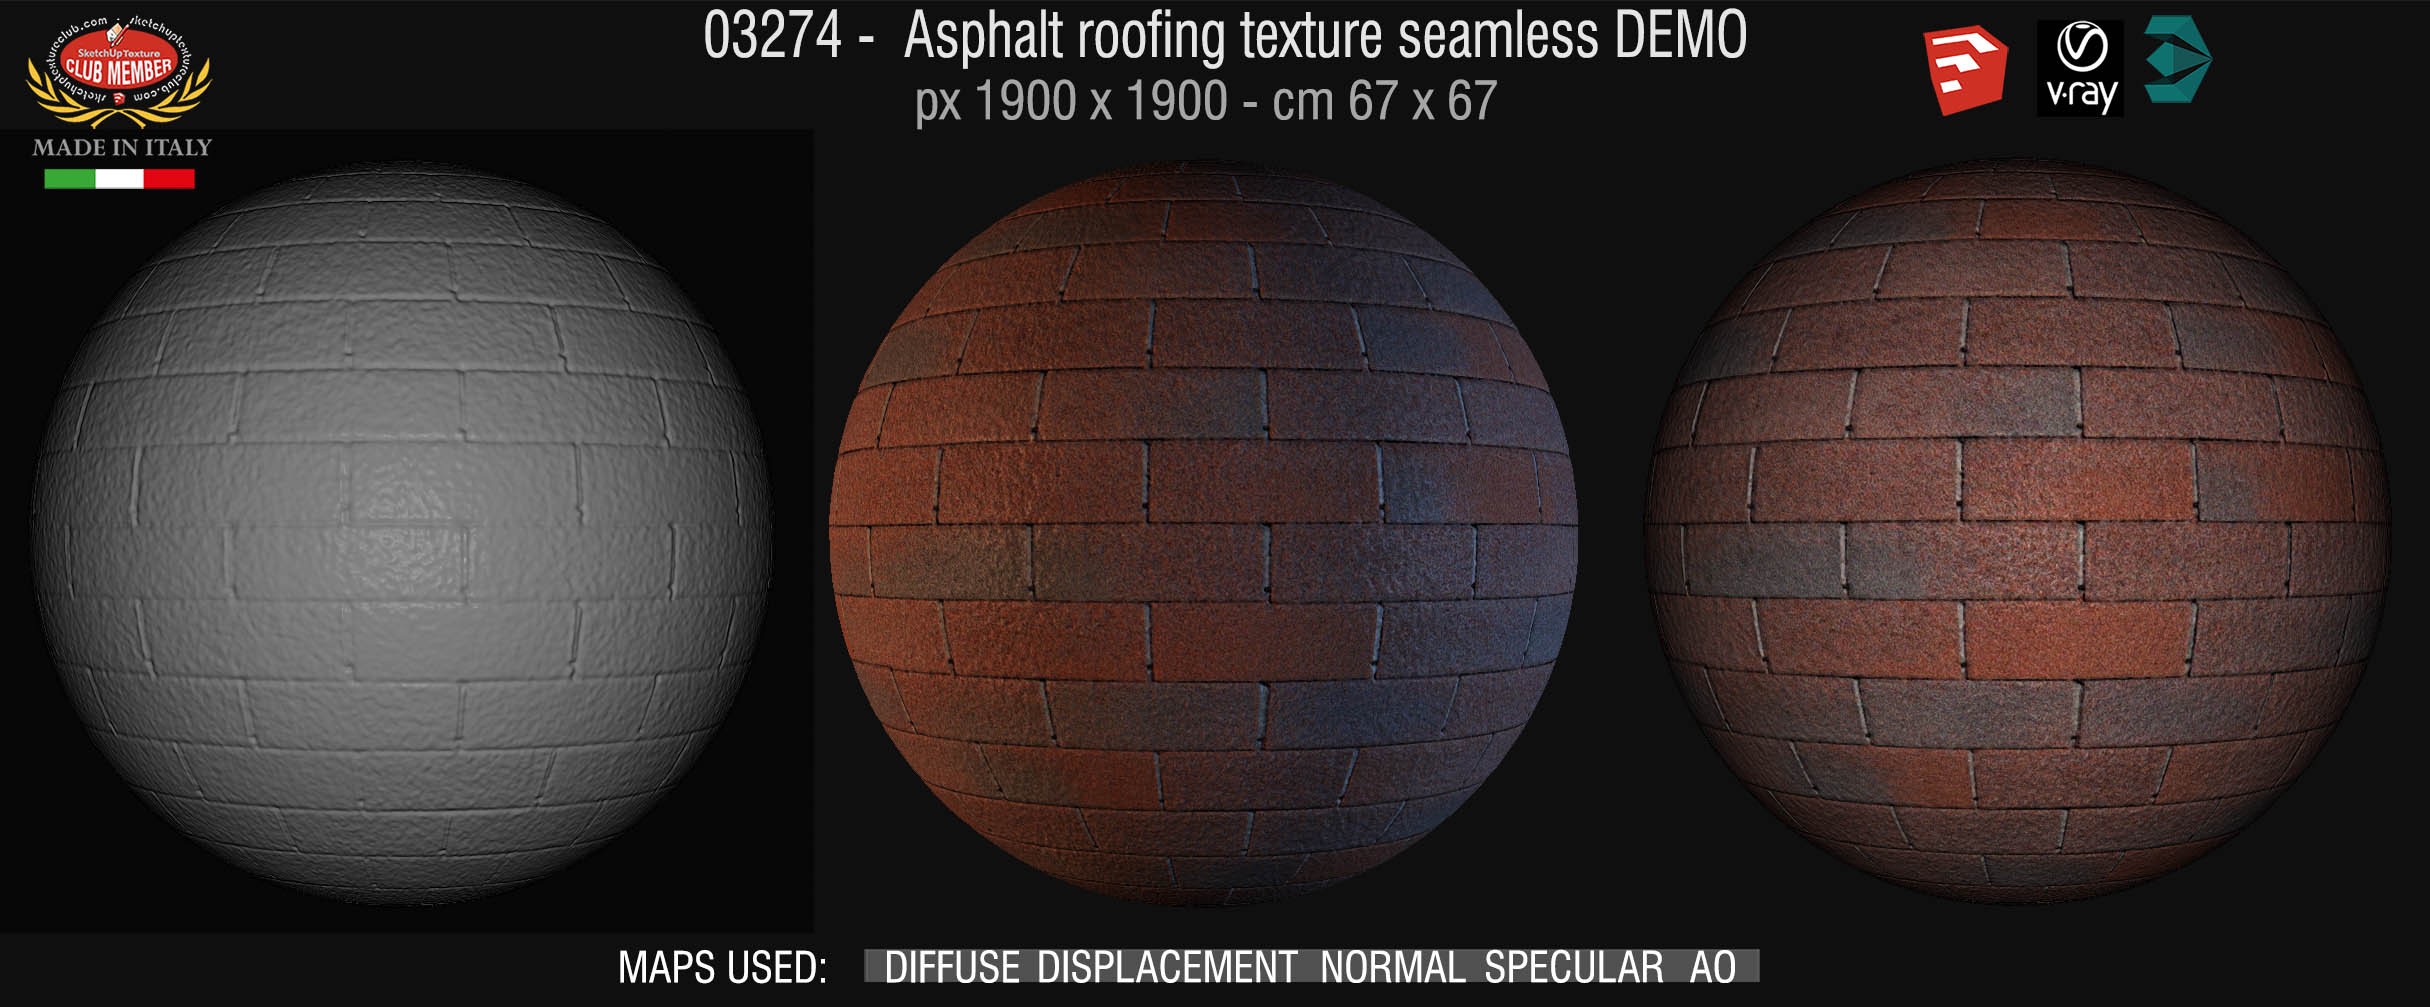 03274 Asphalt roofing texture + maps DEMO